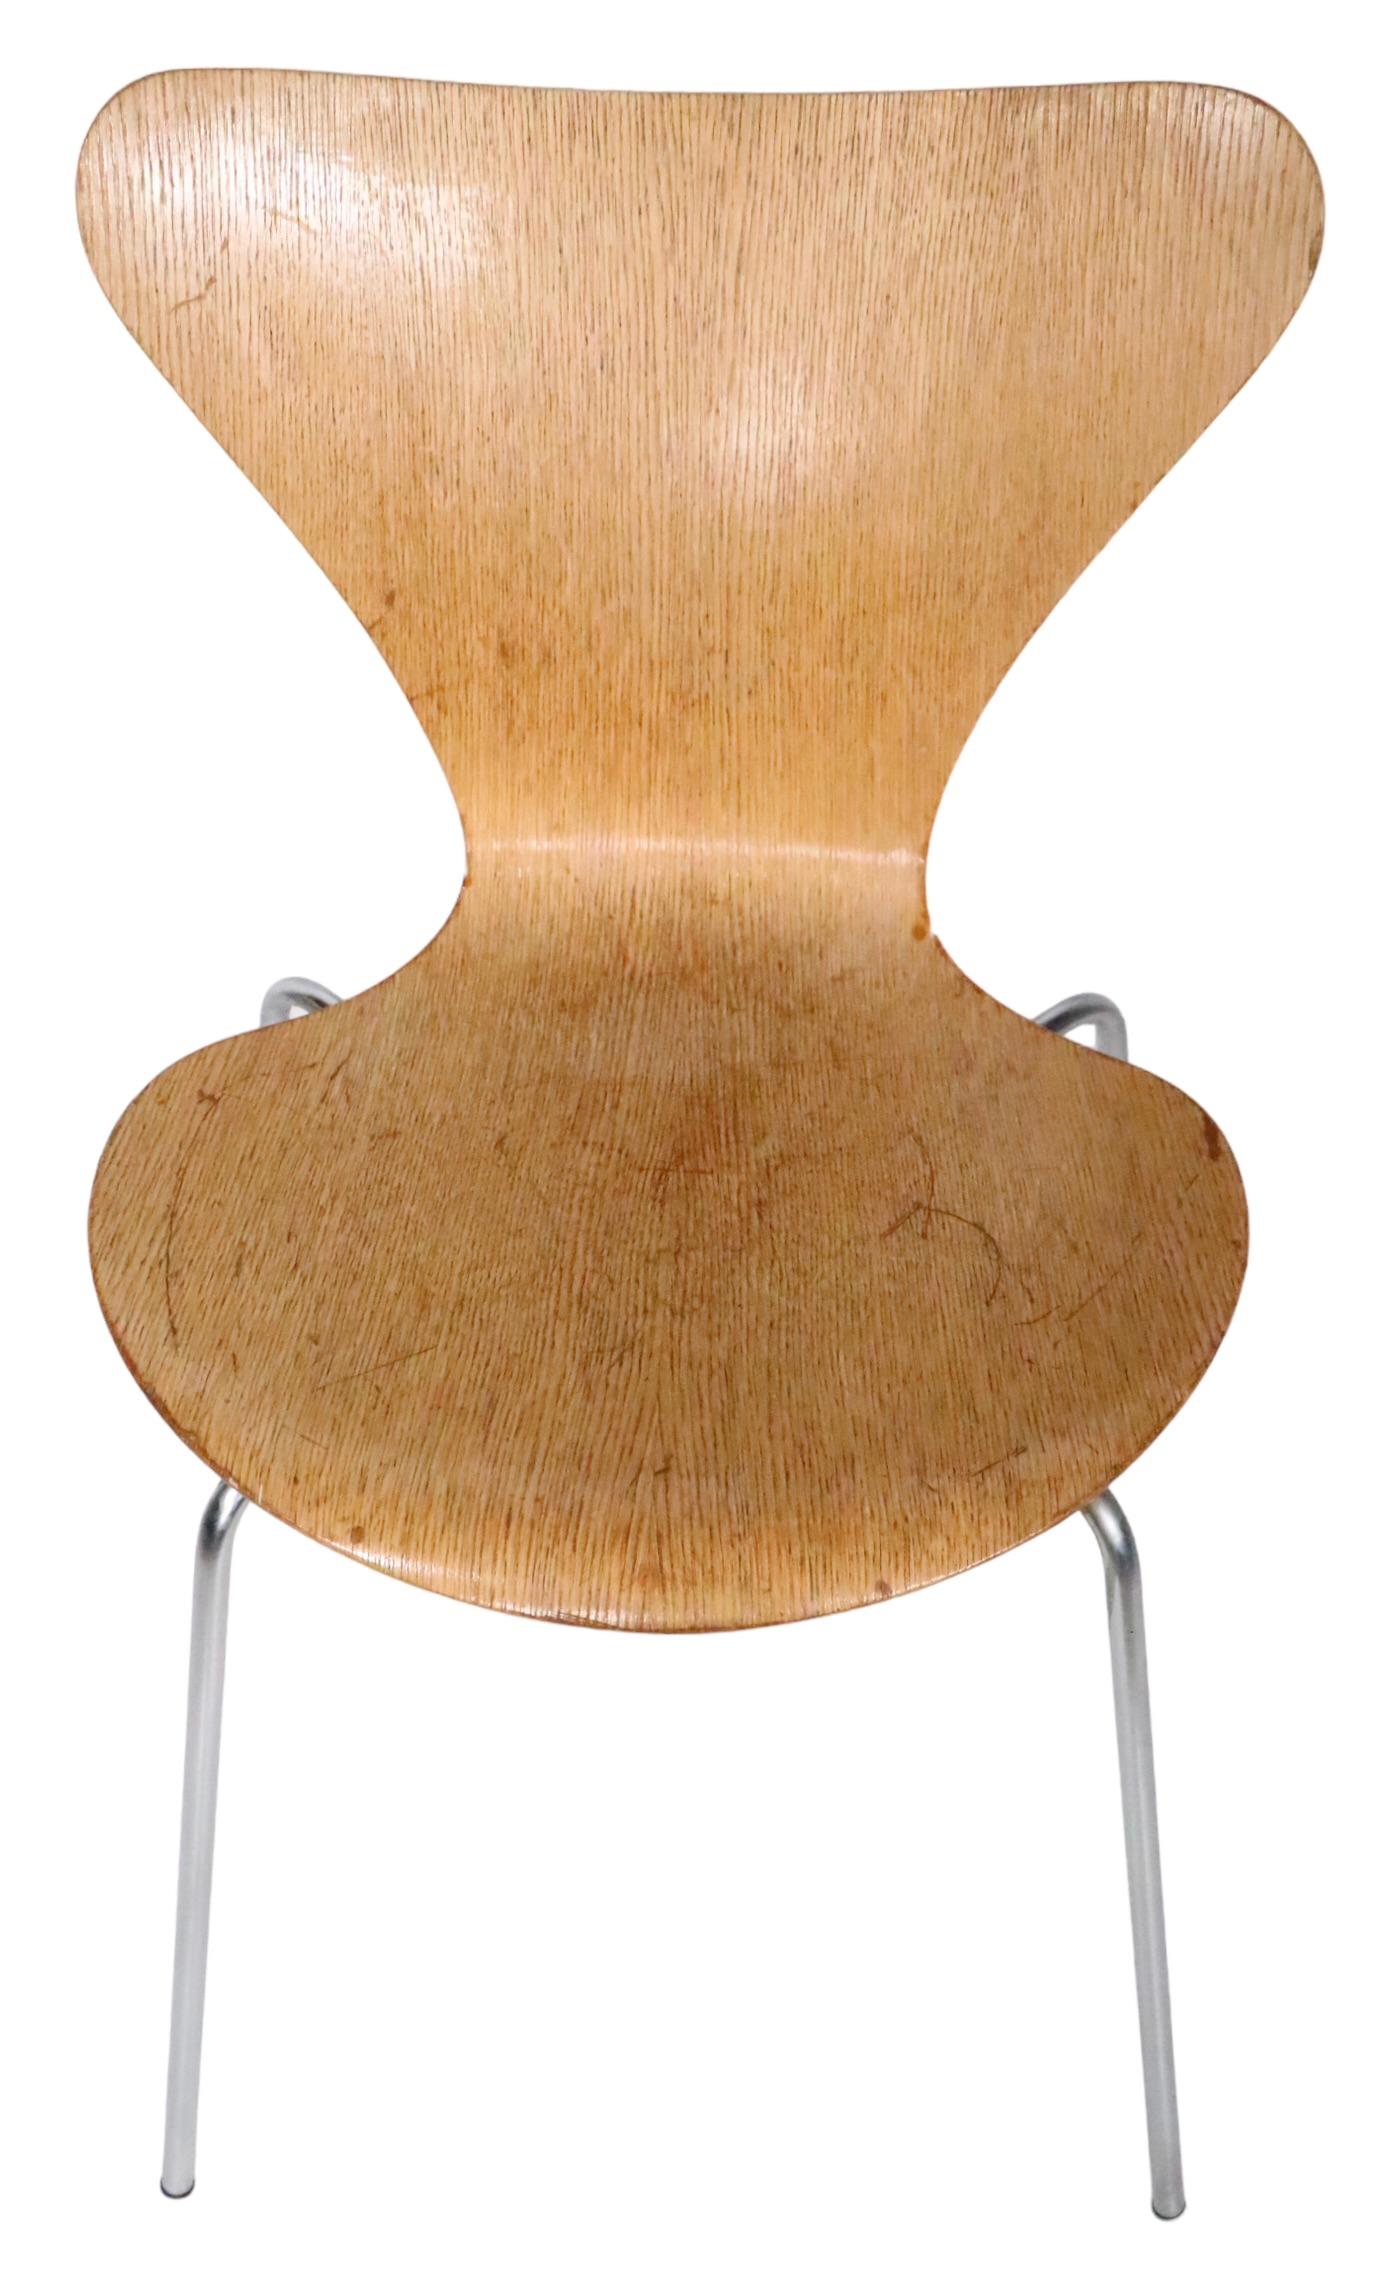 Arne Jacobsen Fritz Hansen Series 7 Butterfly Chair in Oak Veneer, circa 1960s For Sale 3